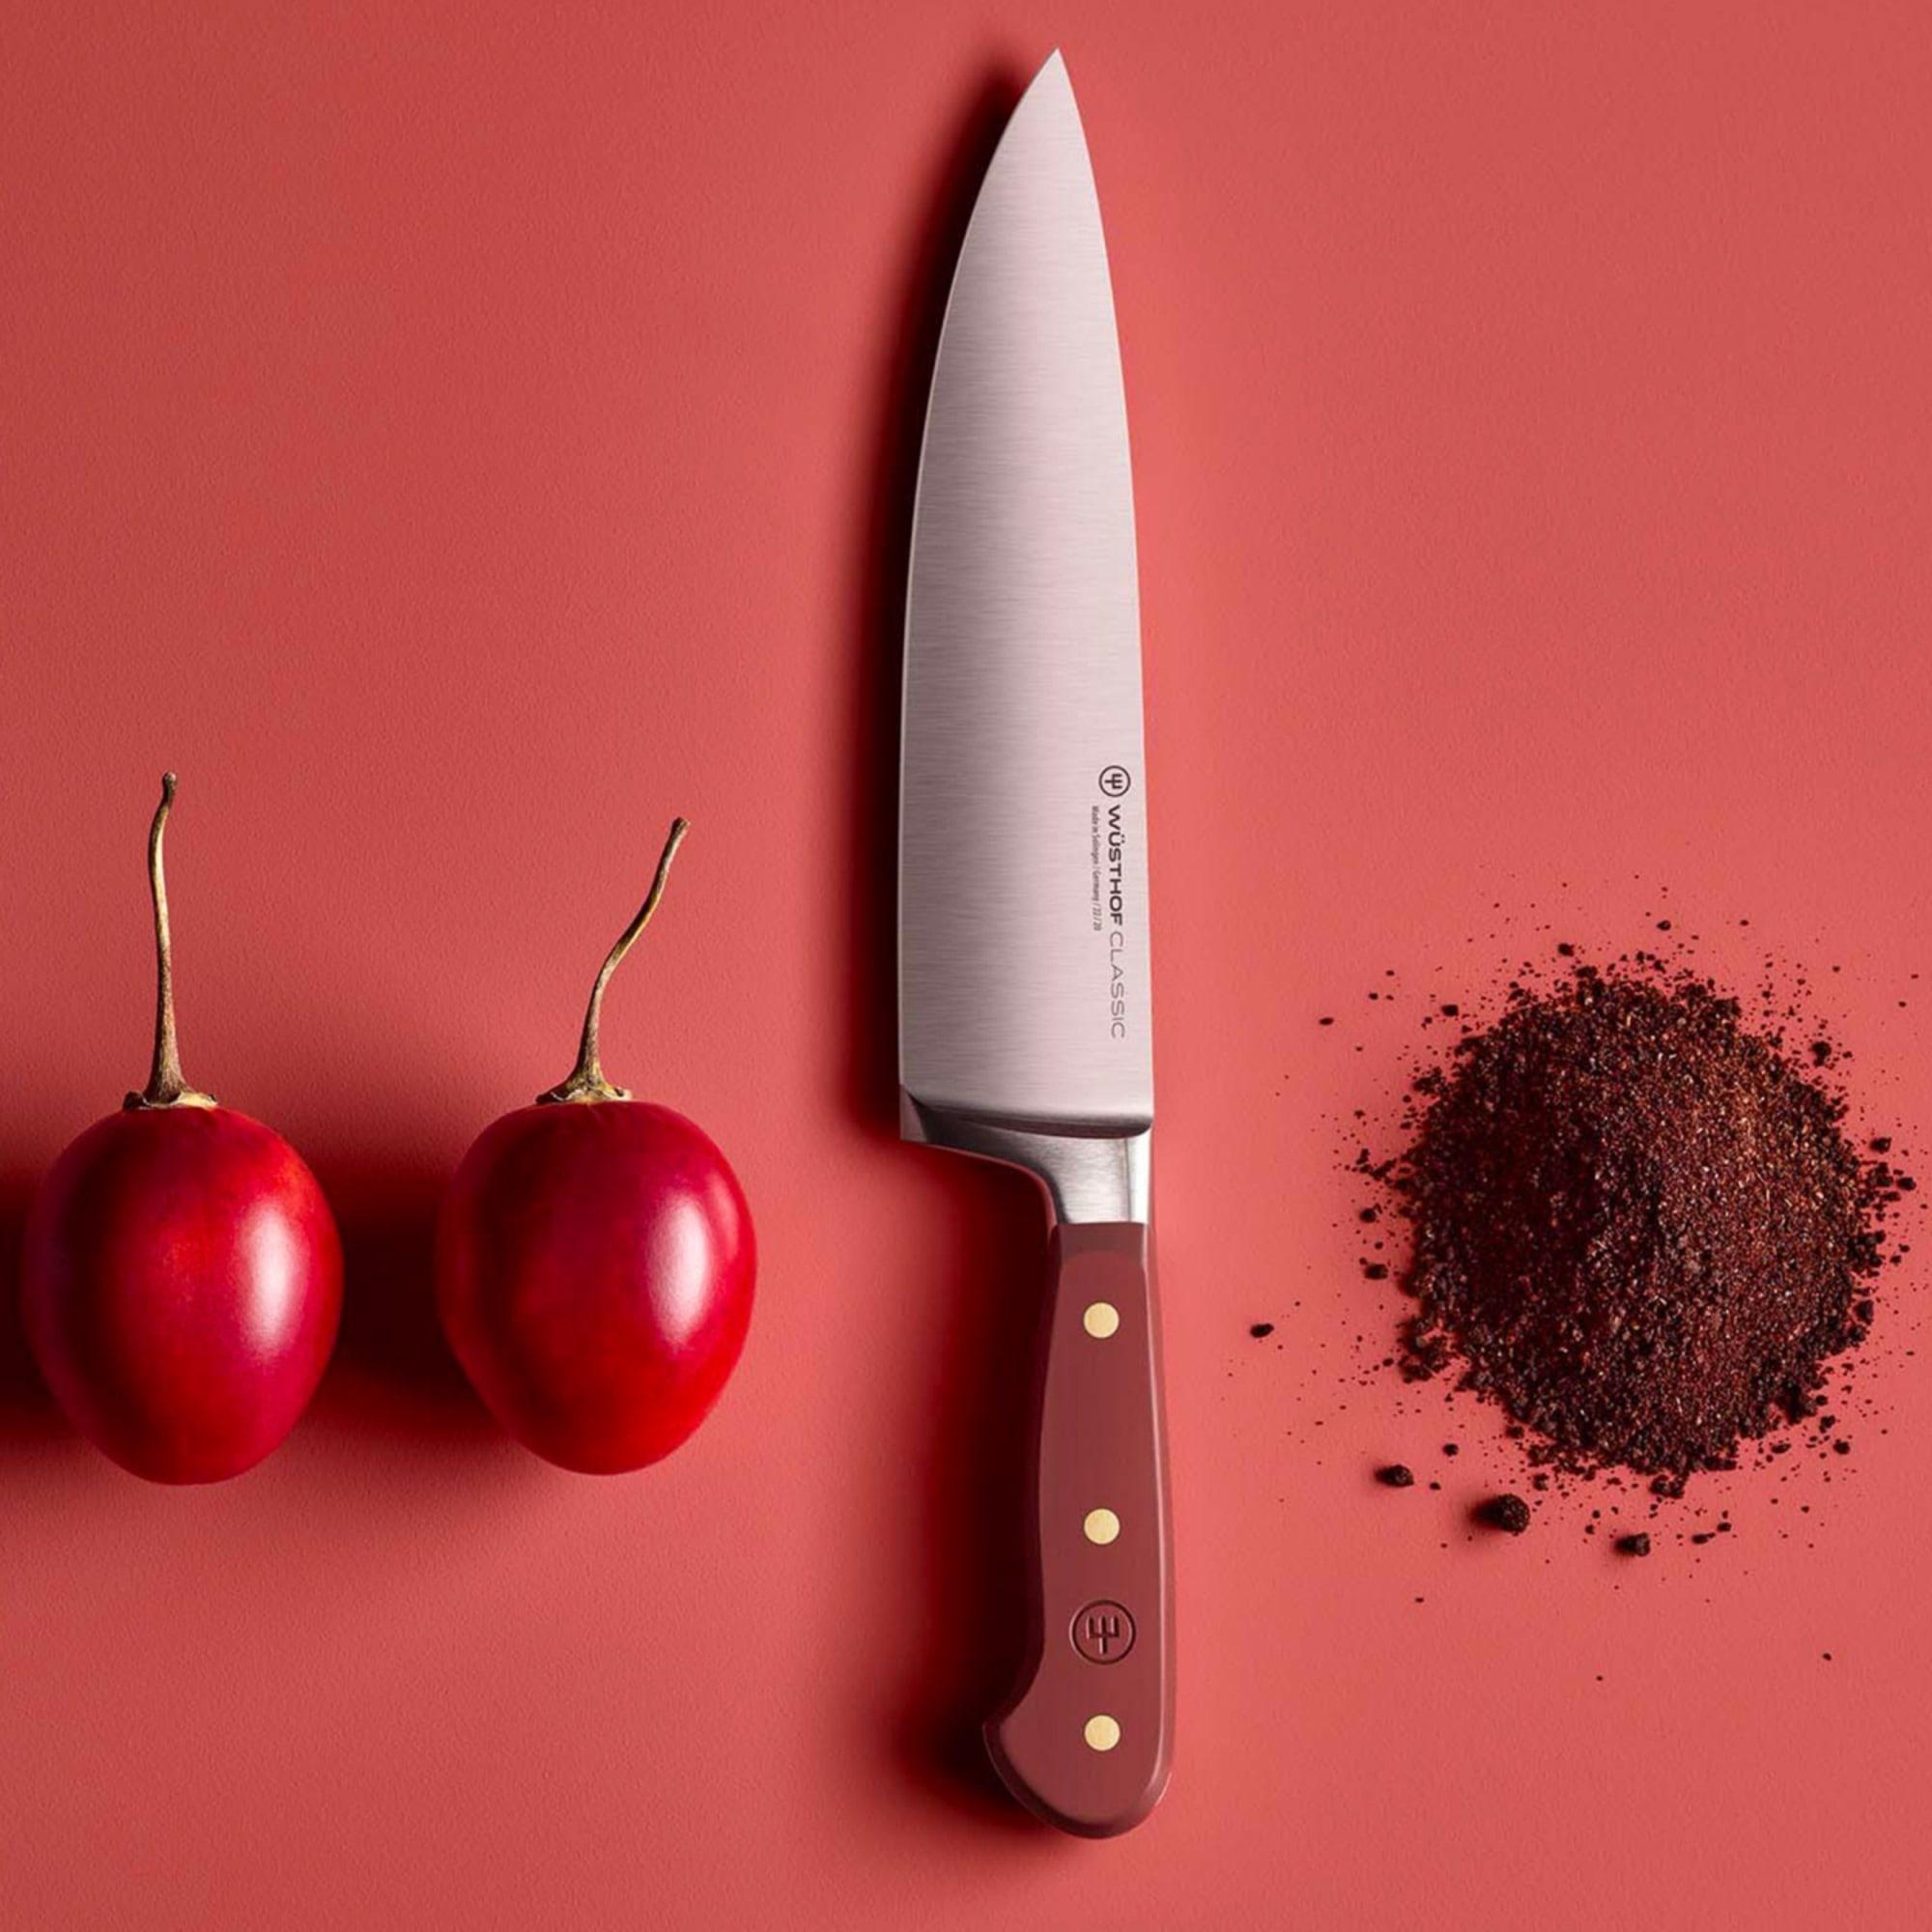 Wusthof Classic Colour Chef's Knife 20cm Tasty Sumac Image 4